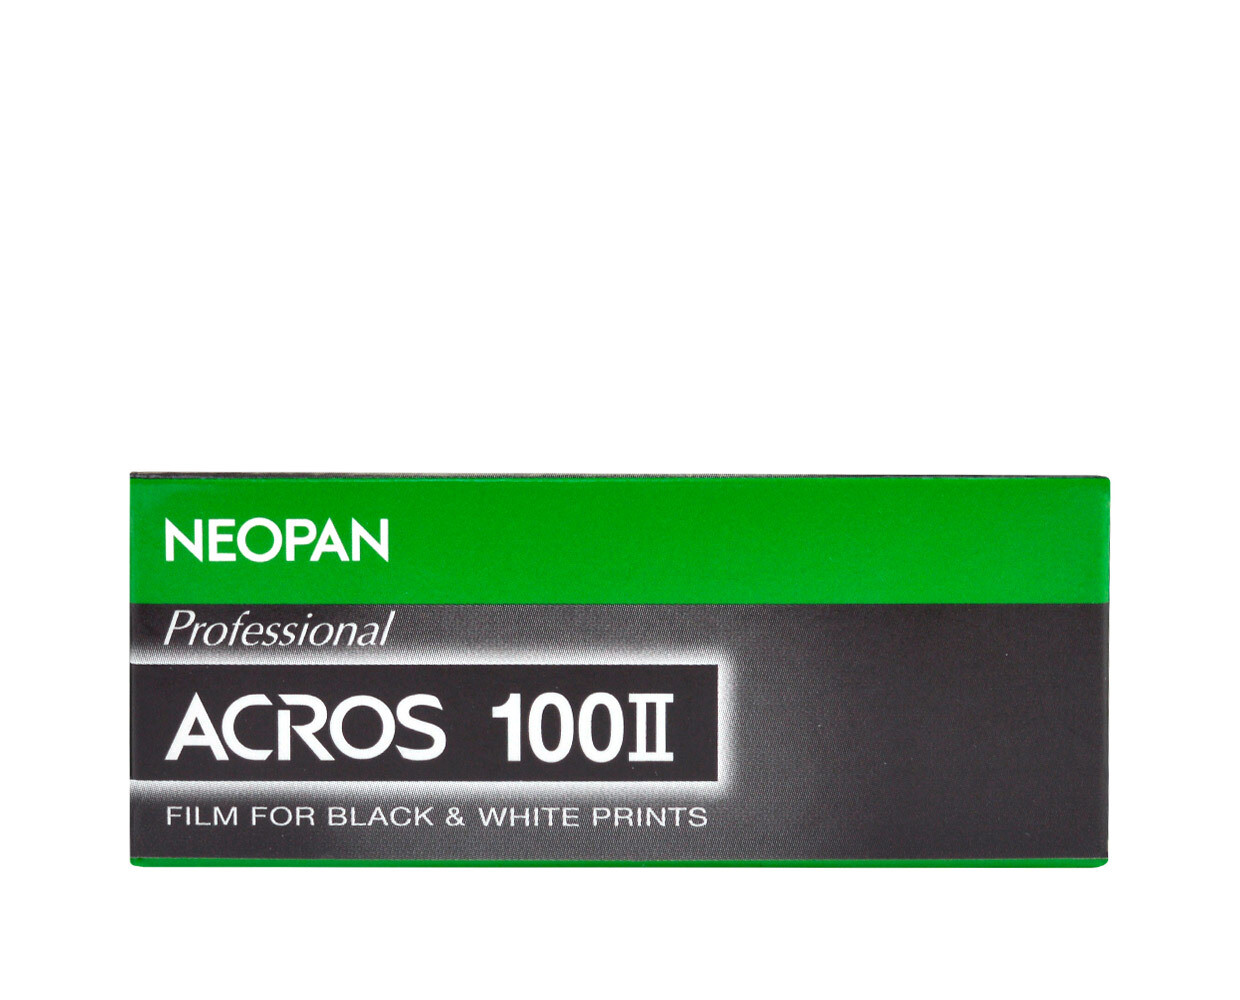 Fujifilm Neopan Acros 100 II - Format 120 - Five-Pack Date 12/2021 with film development